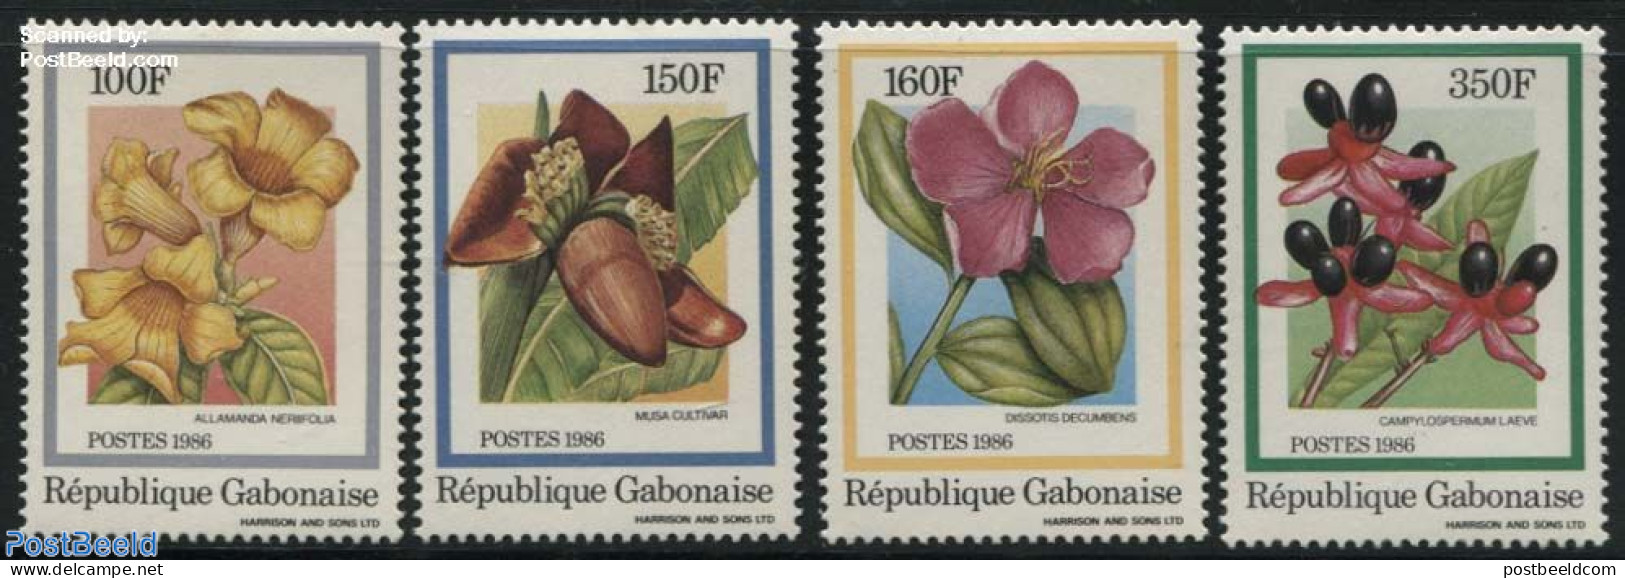 Gabon 1986 Flowers 4v, Mint NH, Nature - Flowers & Plants - Unused Stamps